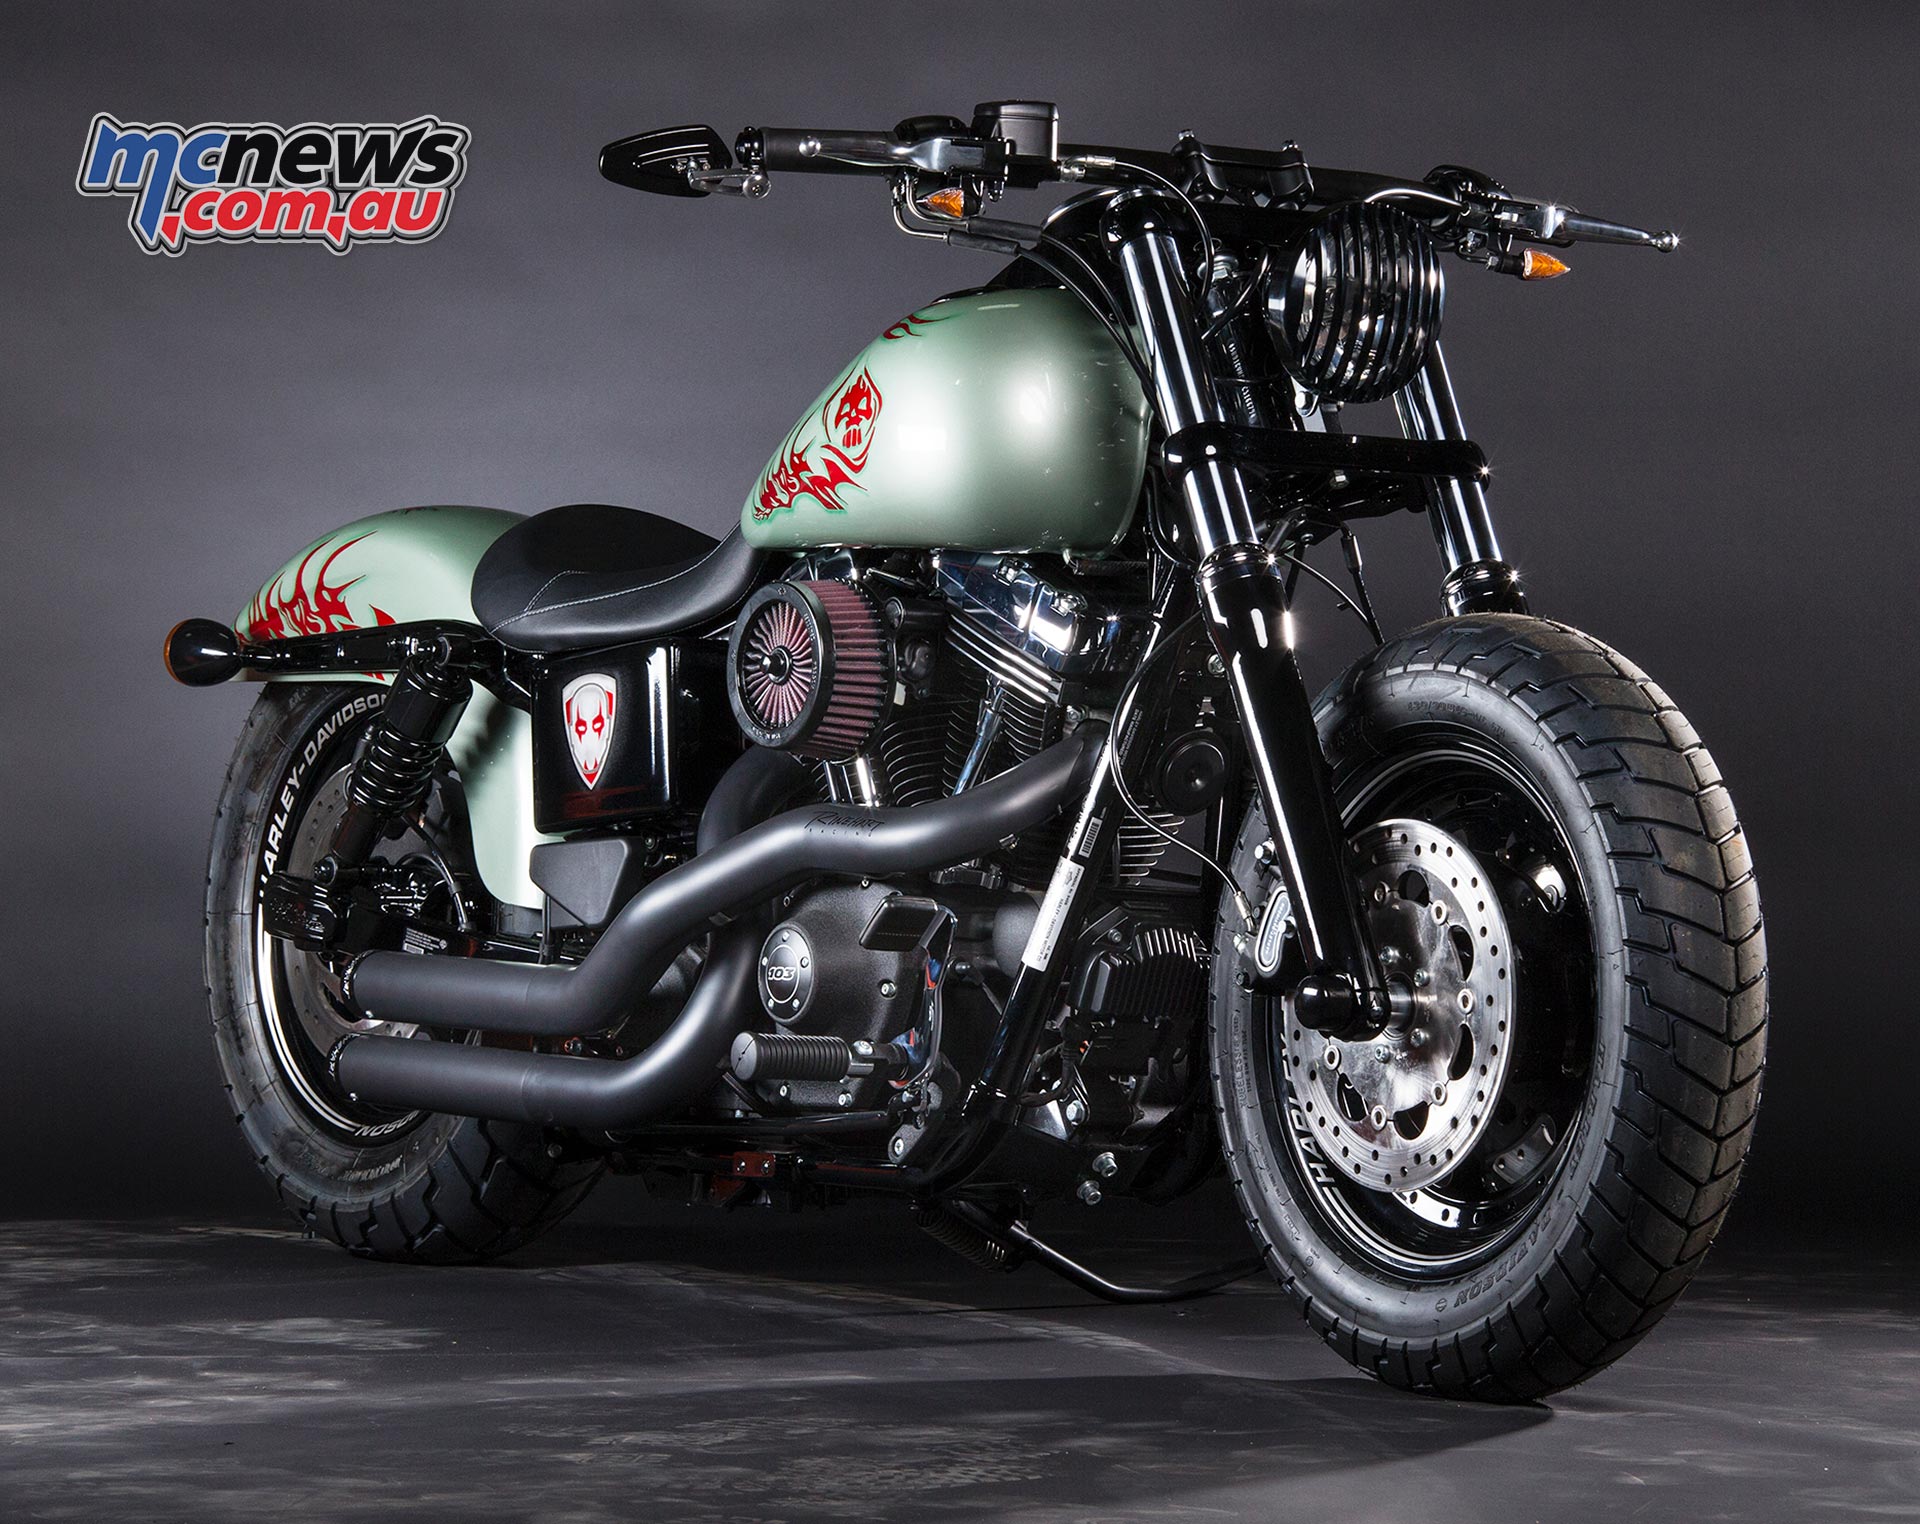 Harley Davidson Marvel Super Hero Customs Mcnews